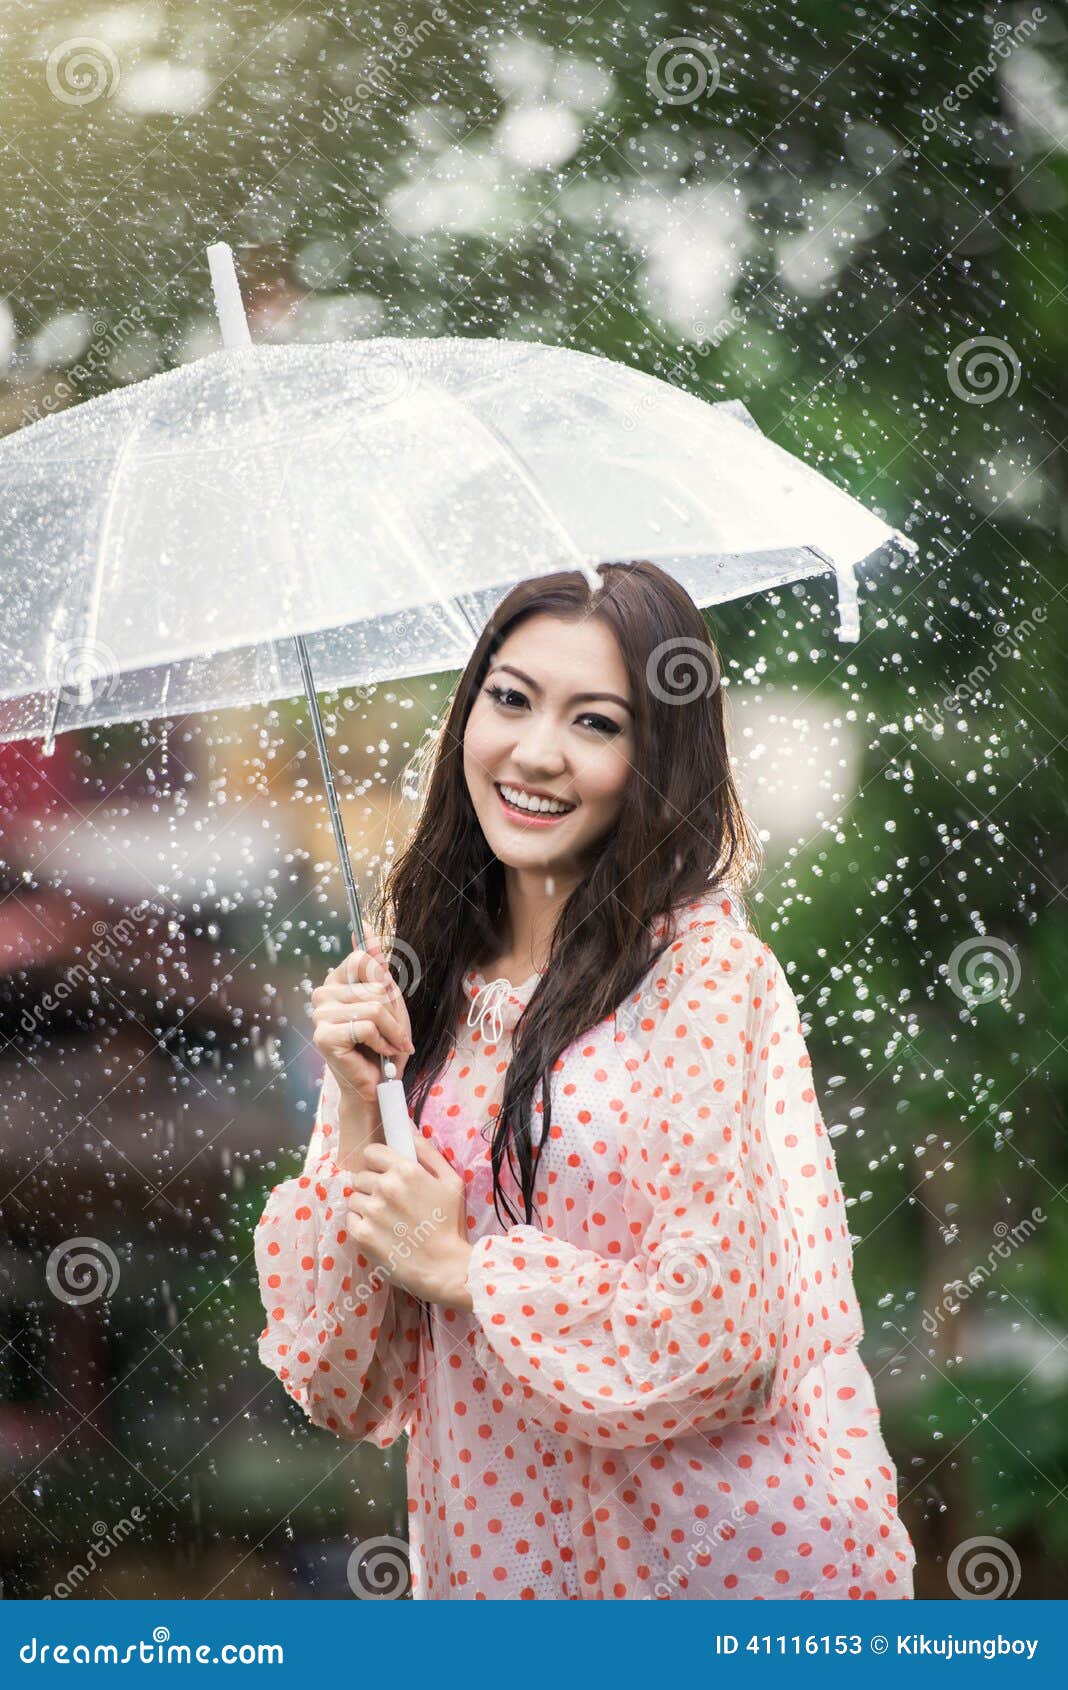 Beautiful Girl in the Rain with Transparent Umbrella Stock Image ...